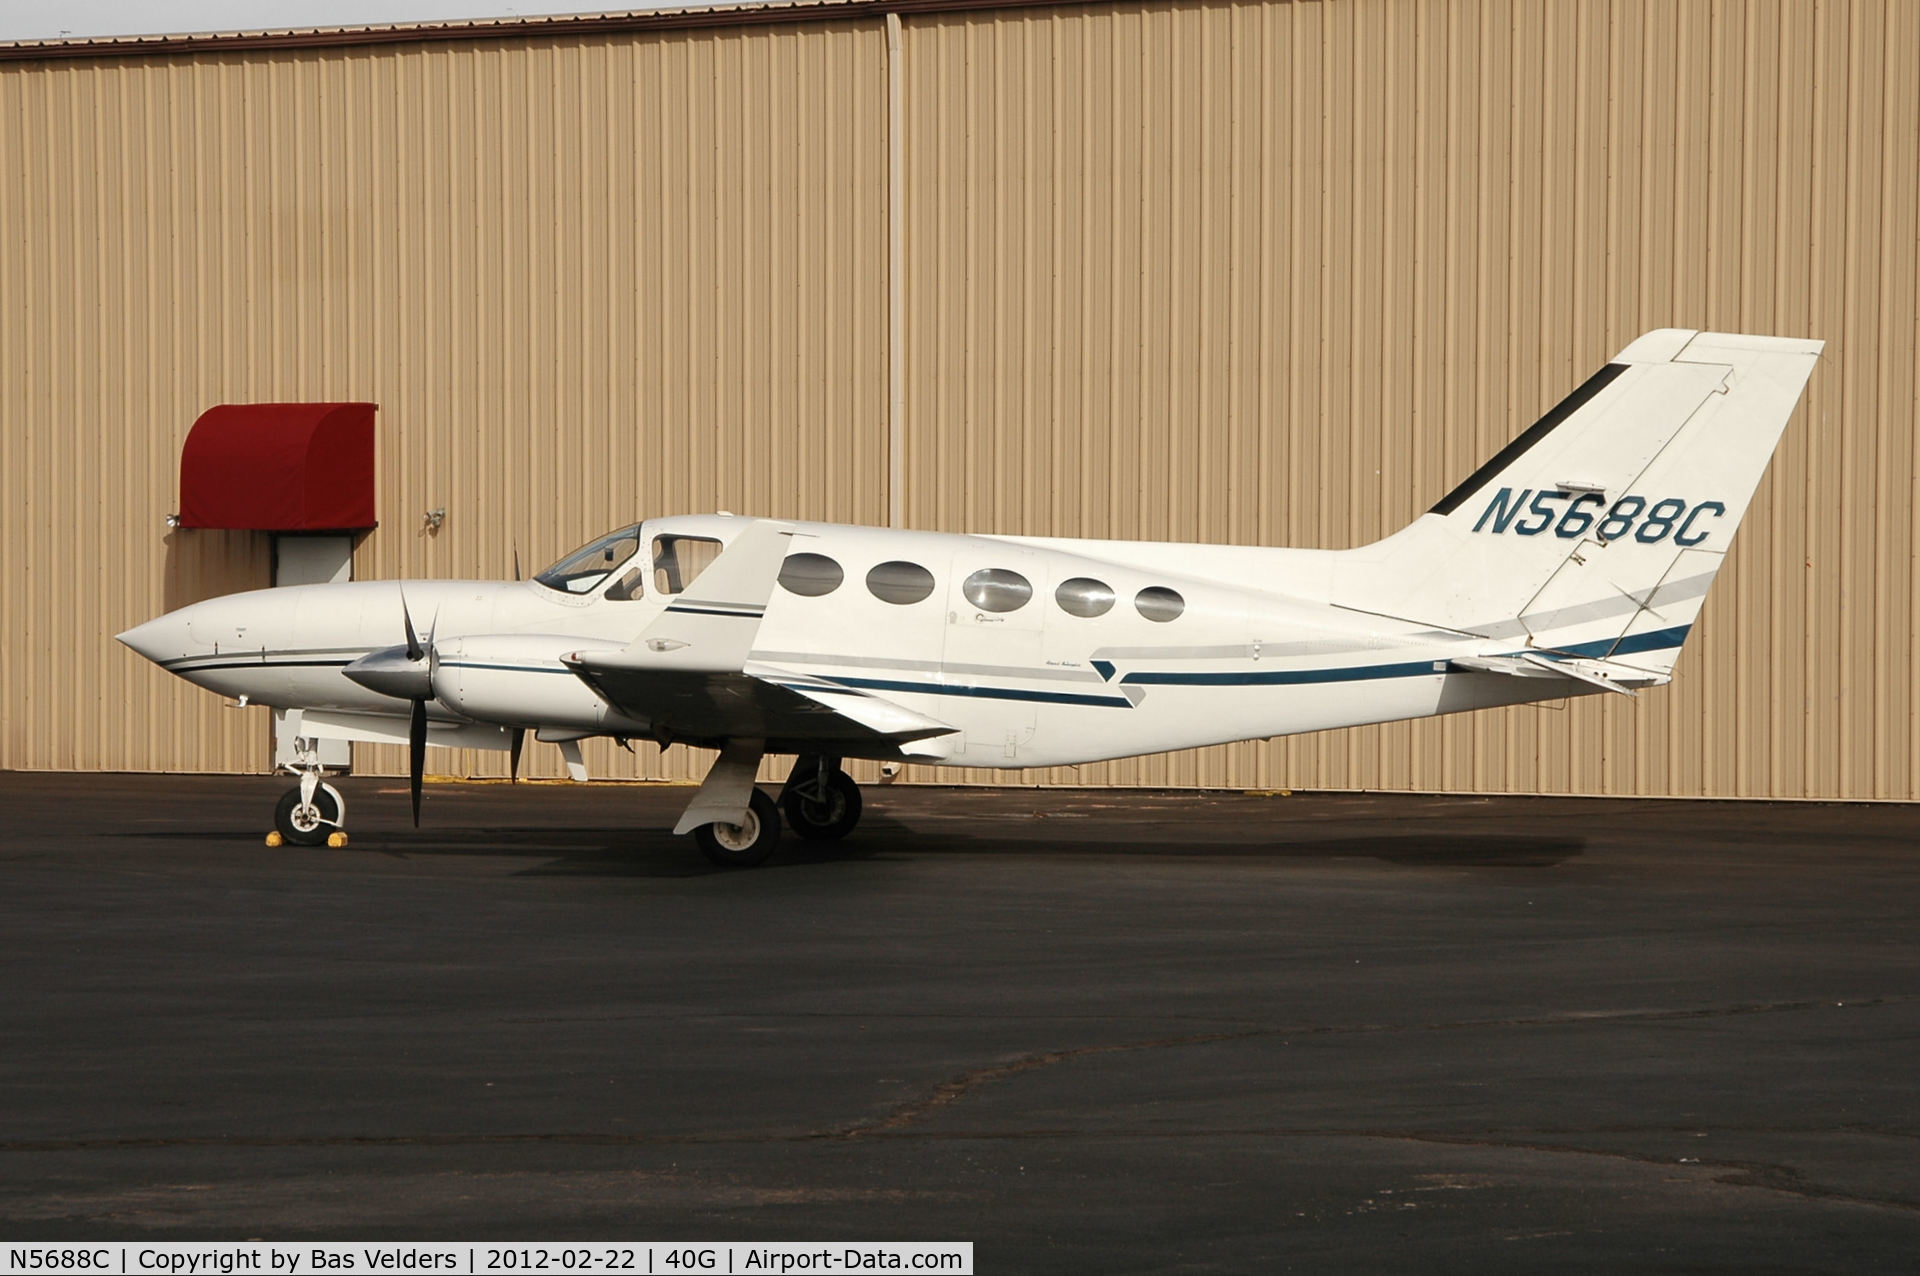 N5688C, 1978 Cessna 414A Chancellor C/N 414A0221, Chancellor @ Grand Canyon Valle Airport, AZ.